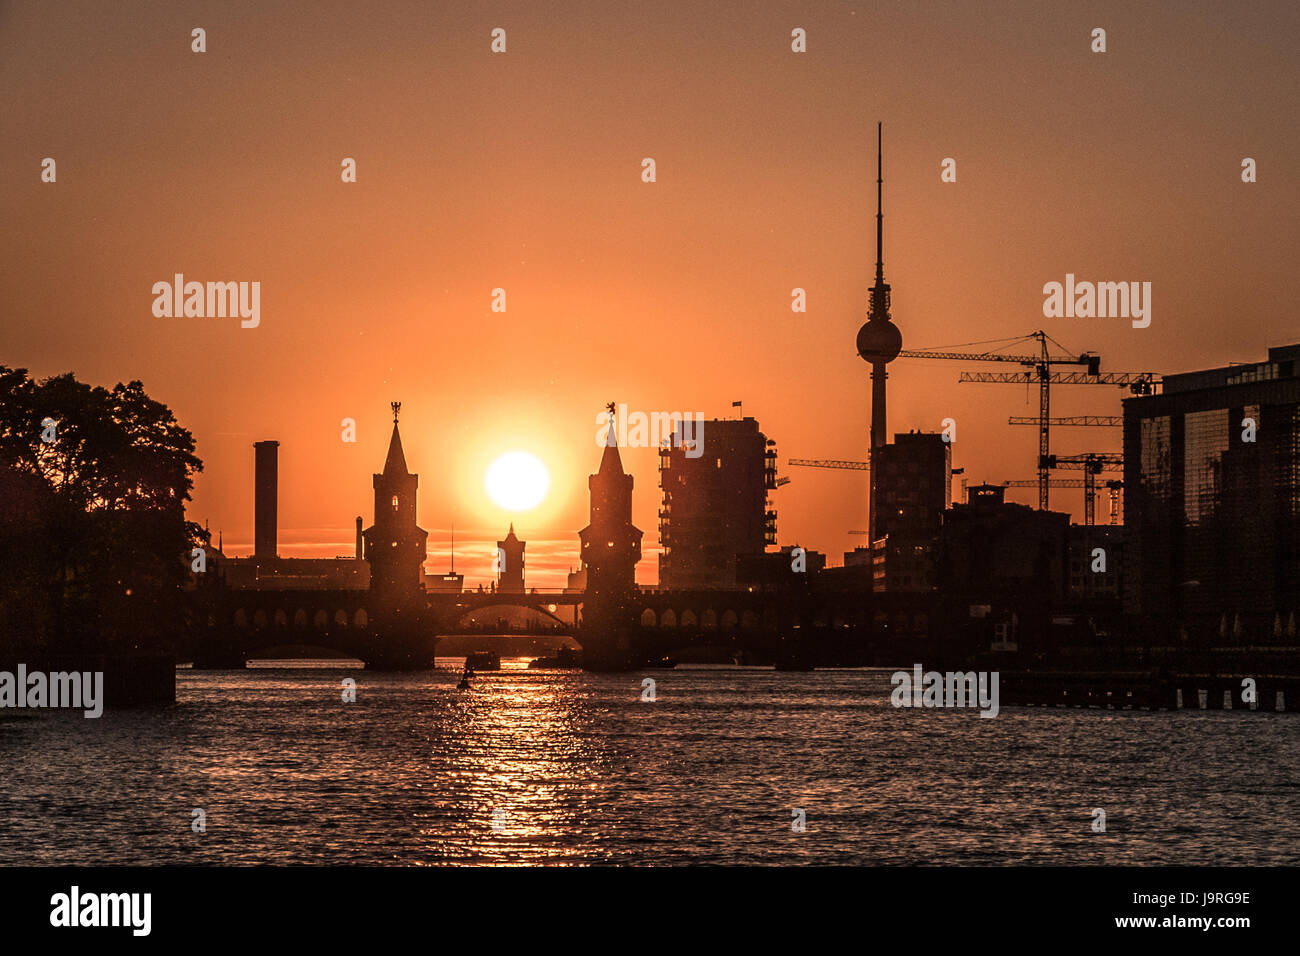 River Spree, Oberbaum Bridge, Tv Tower - Berlin city skyline with sunset sky Stock Photo